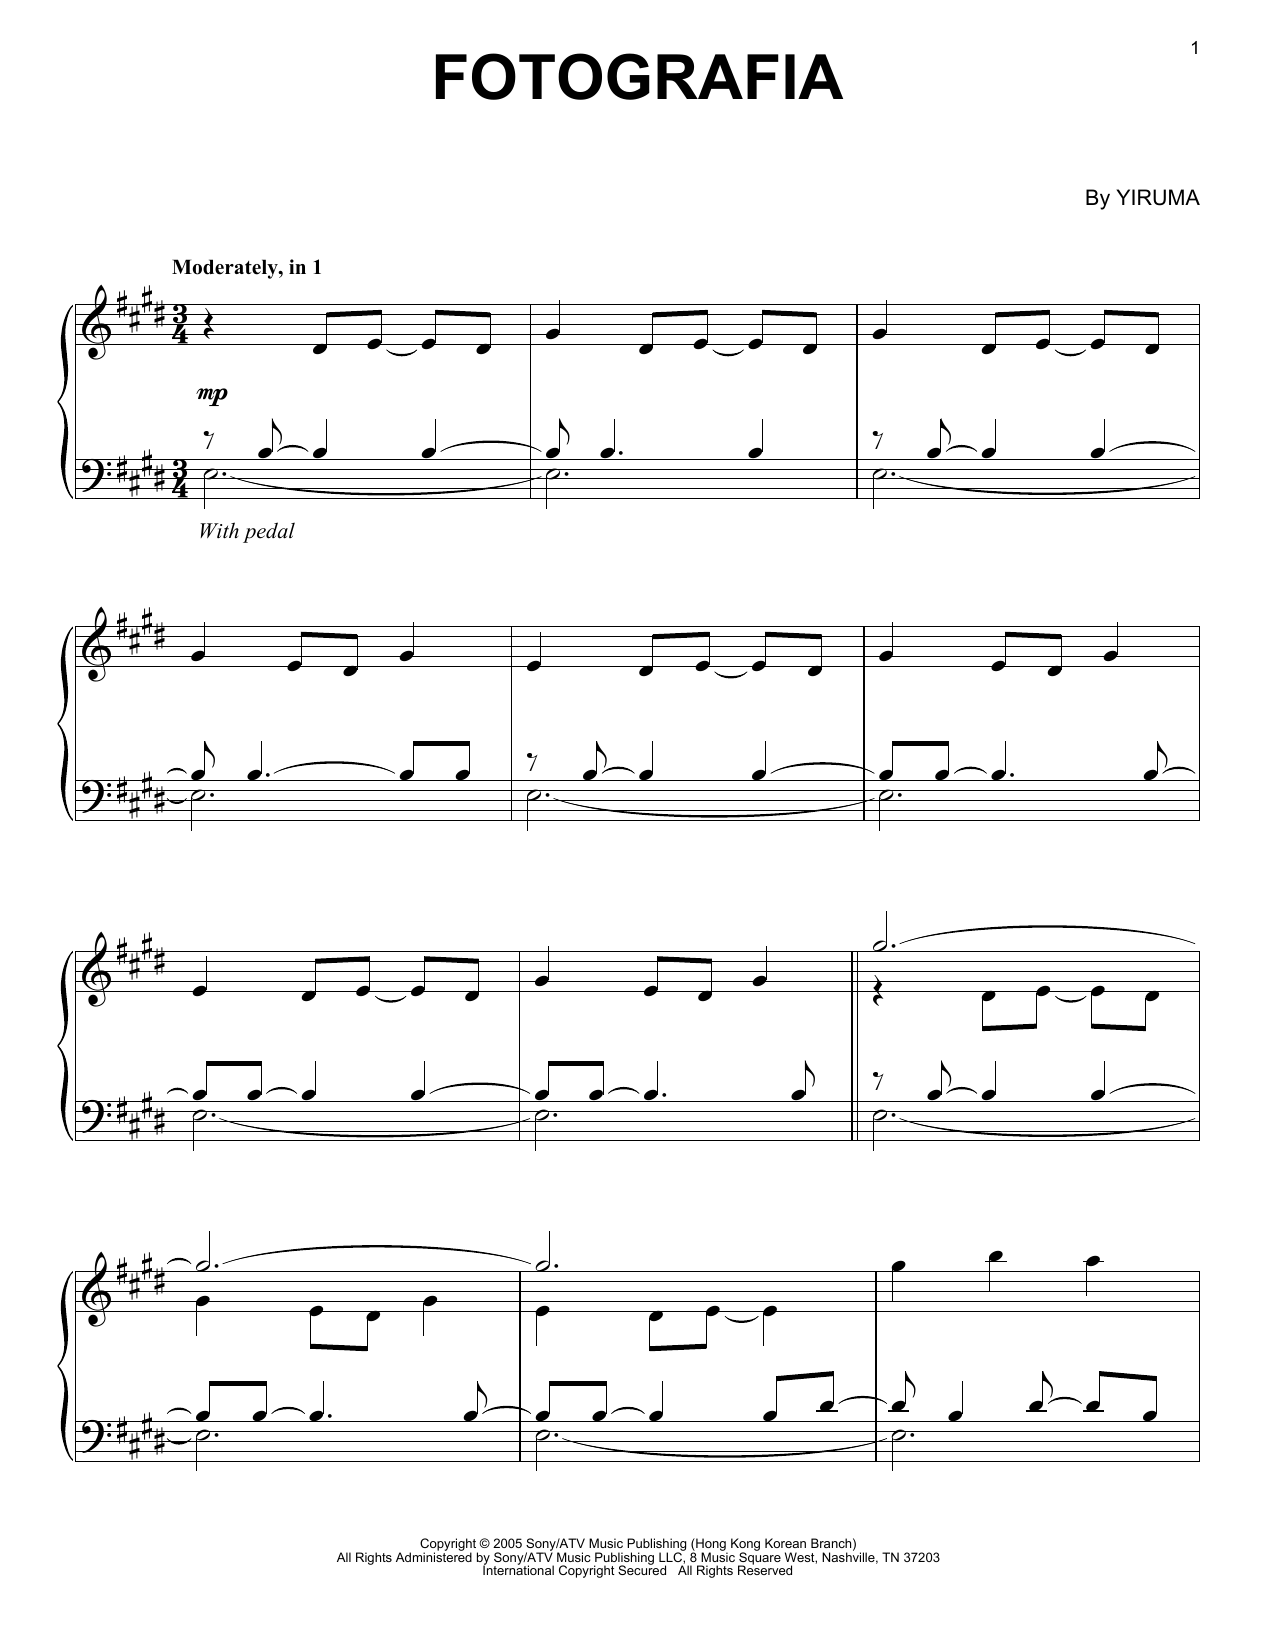 Yiruma Fotografia Sheet Music Notes & Chords for Piano - Download or Print PDF